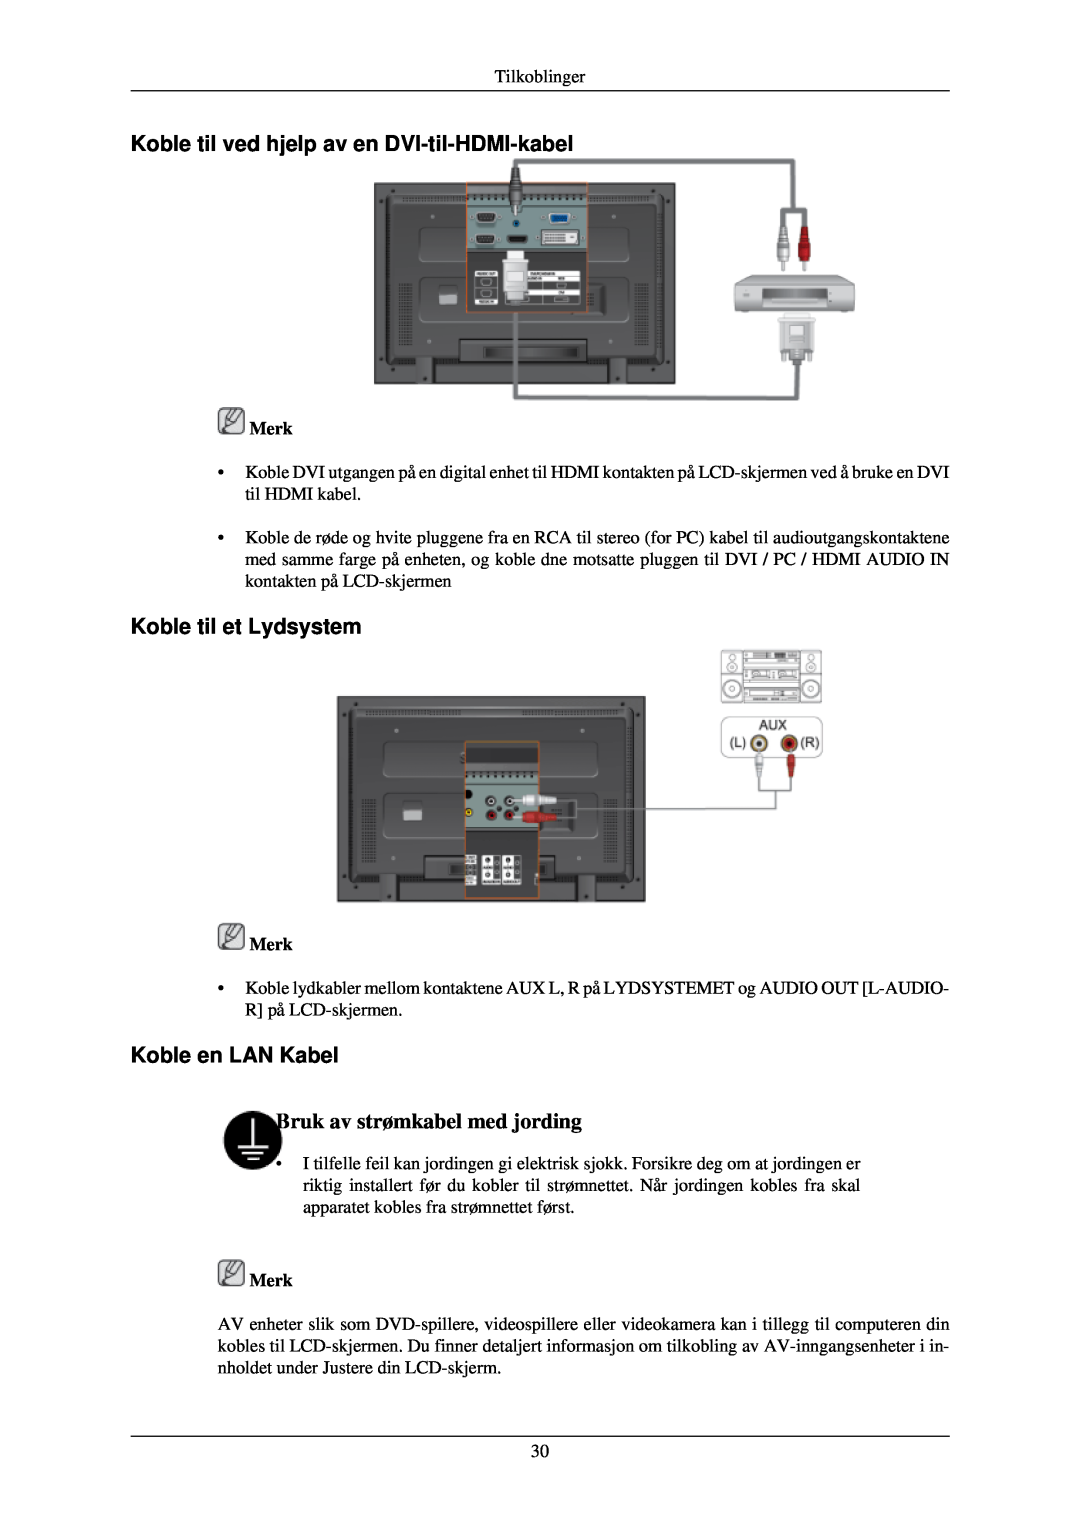 Samsung LH46TCUMBC/EN manual Koble til ved hjelp av en DVI-til-HDMI-kabel, Koble til et Lydsystem, Koble en LAN Kabel, Merk 